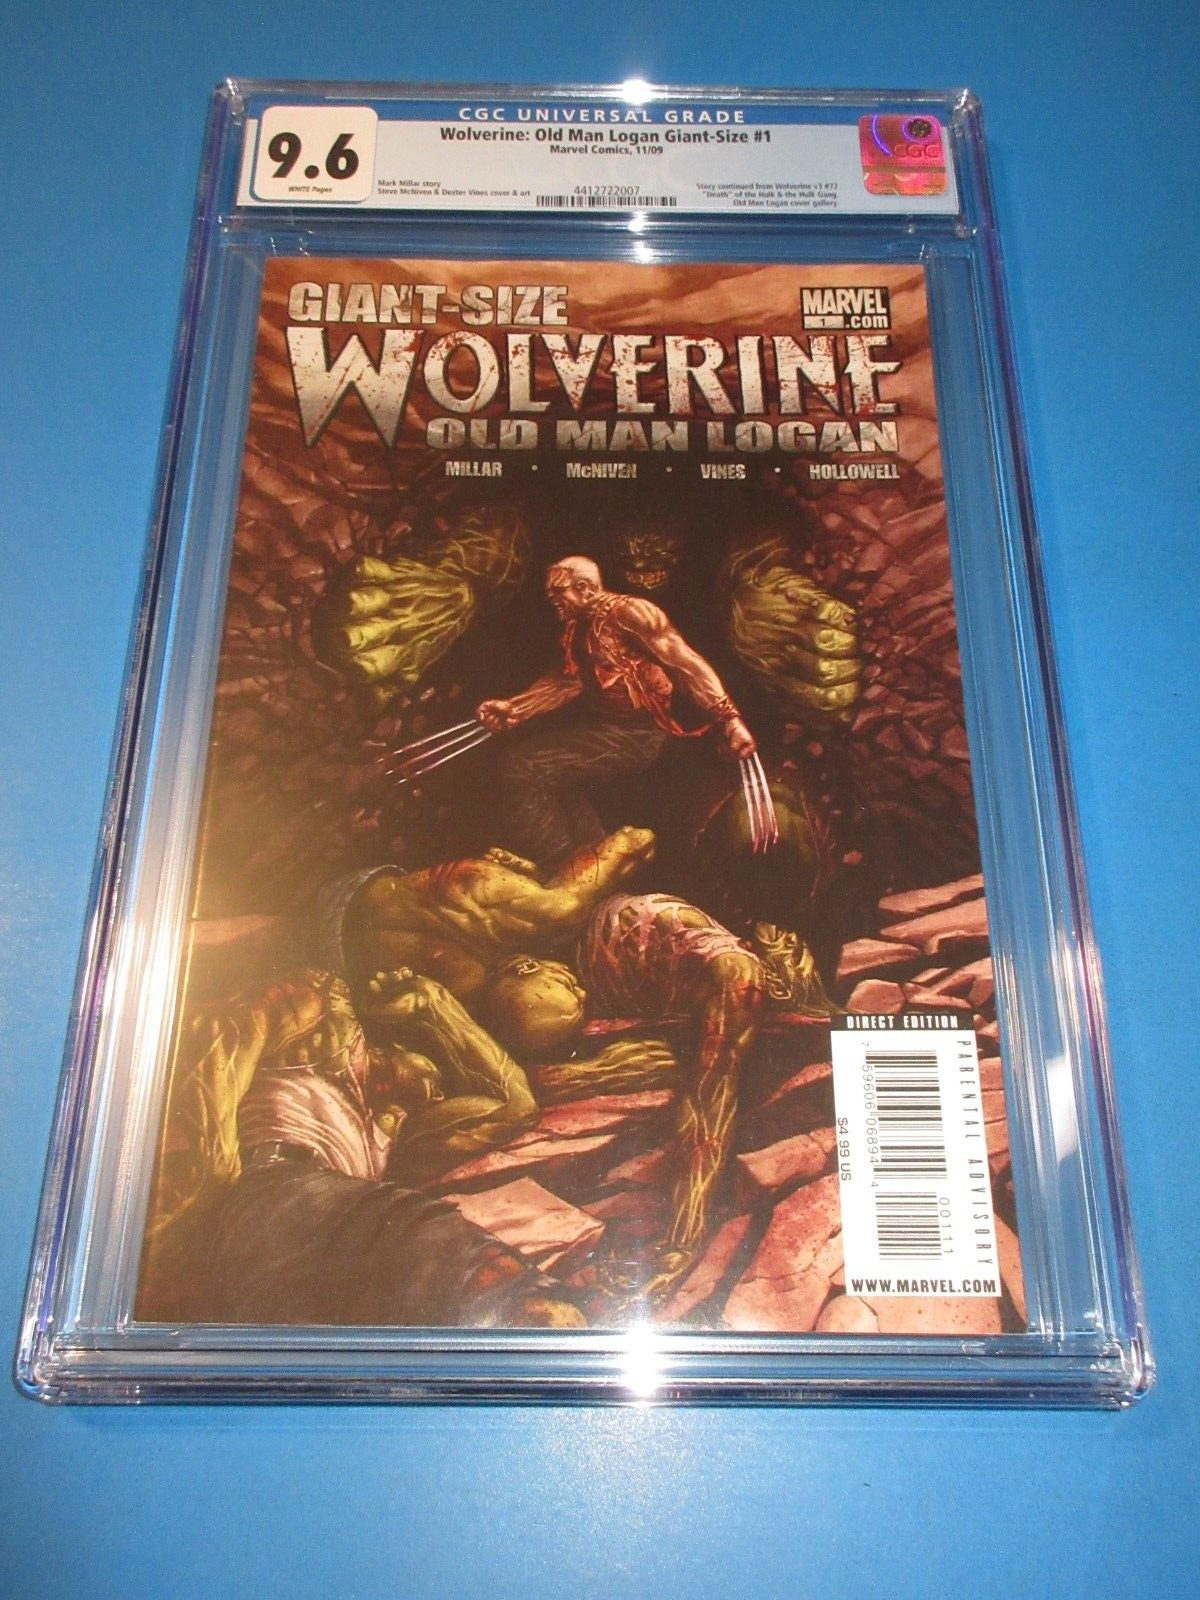 Giant-Size Wolverine Old Man Logan #1 CGC 9.6 NM+ Gorgeous gem Wow